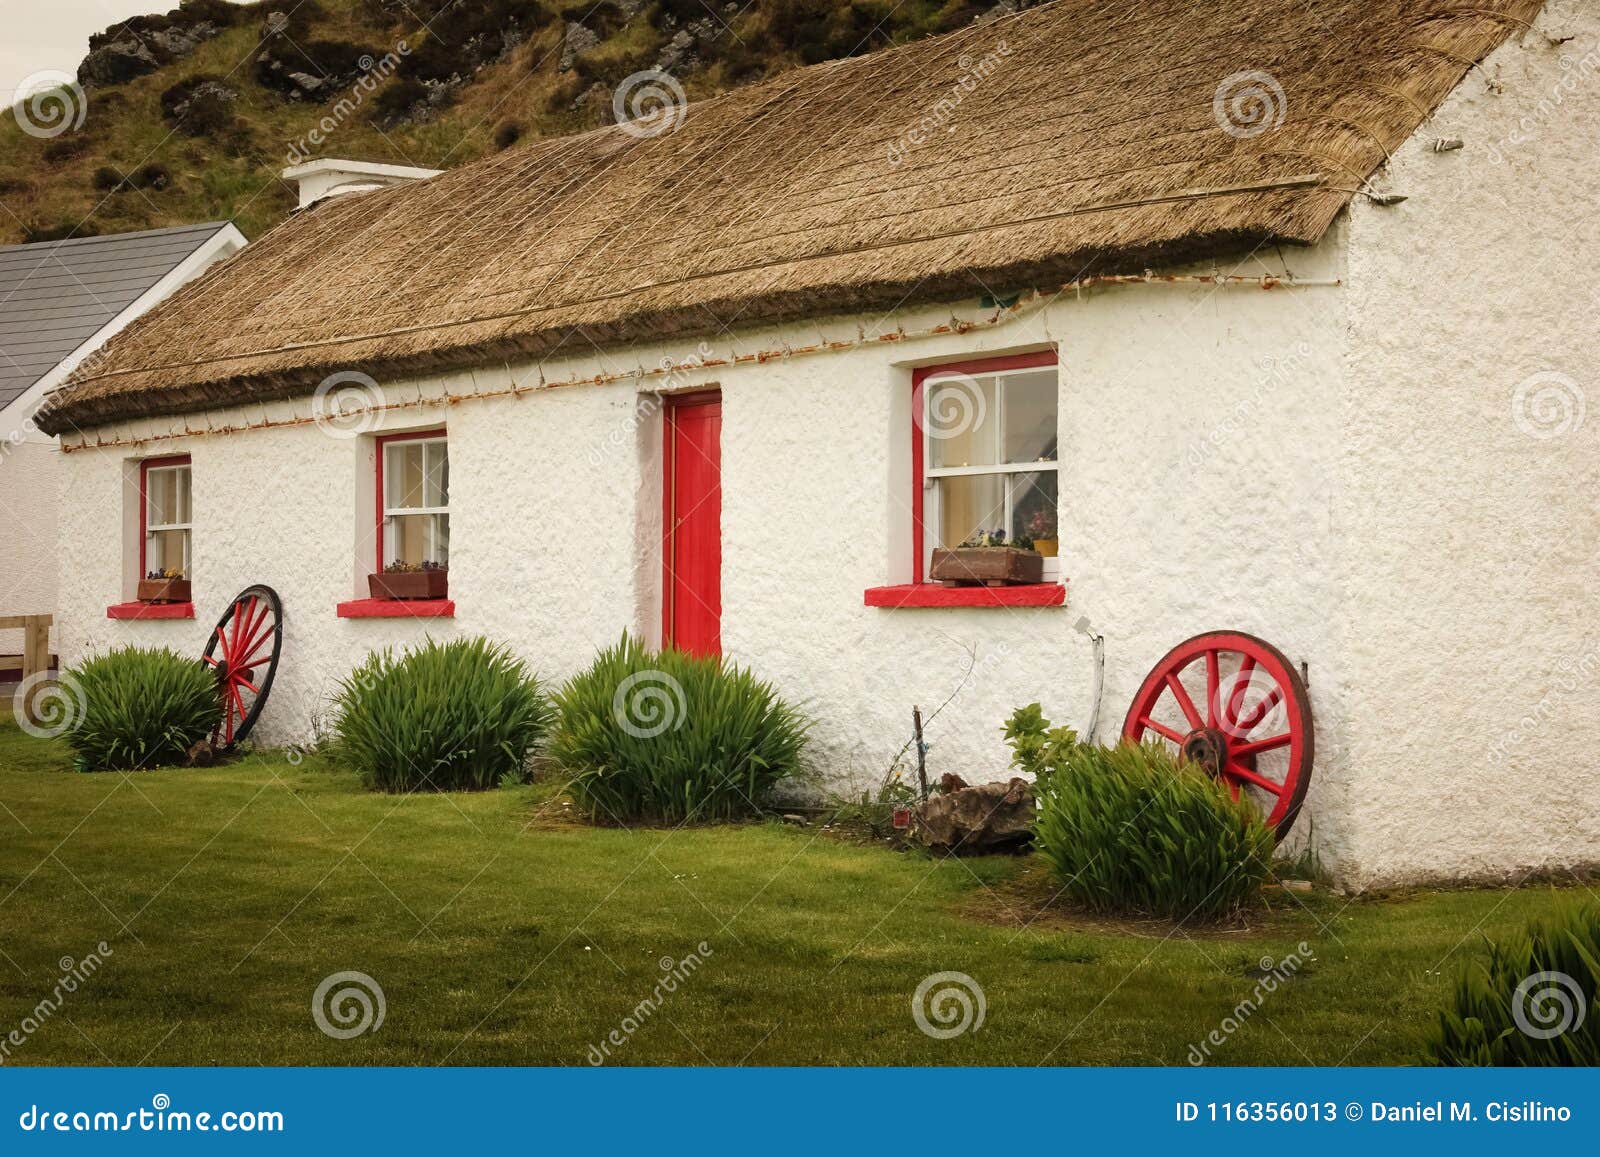 glencolumbkille folk village. county donegal. ireland